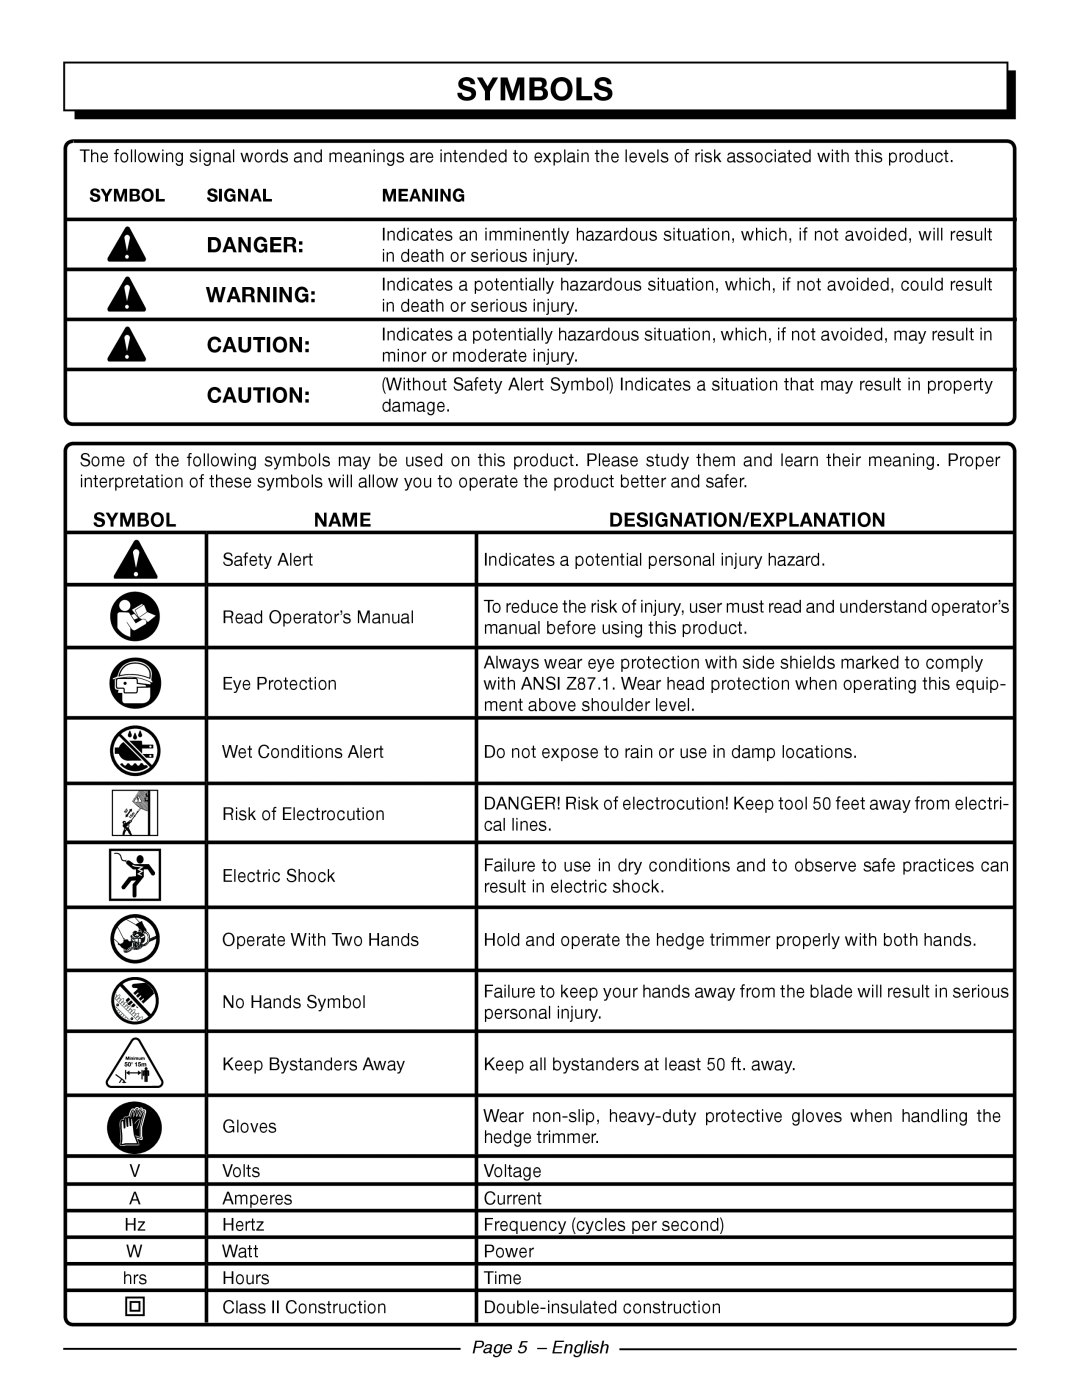 Homelite UT44121 manuel dutilisation Symbols, Danger, Name, Designation/Explanation, Signal, Meaning, Page 5 - English 